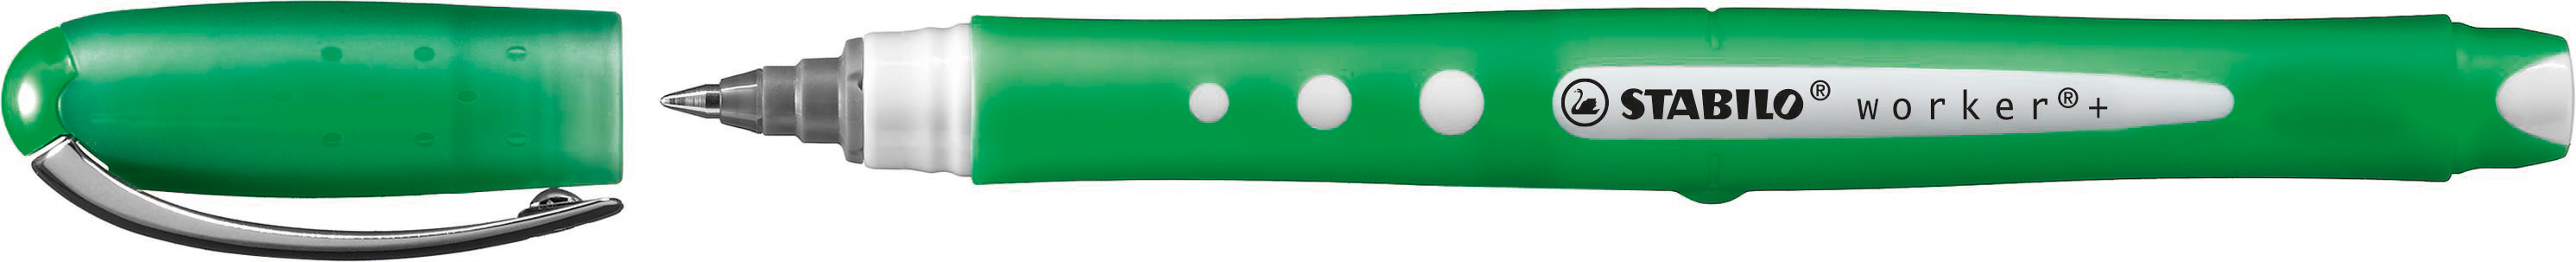 STABILO worker colorful roller 0.5mm 2019/36 vert